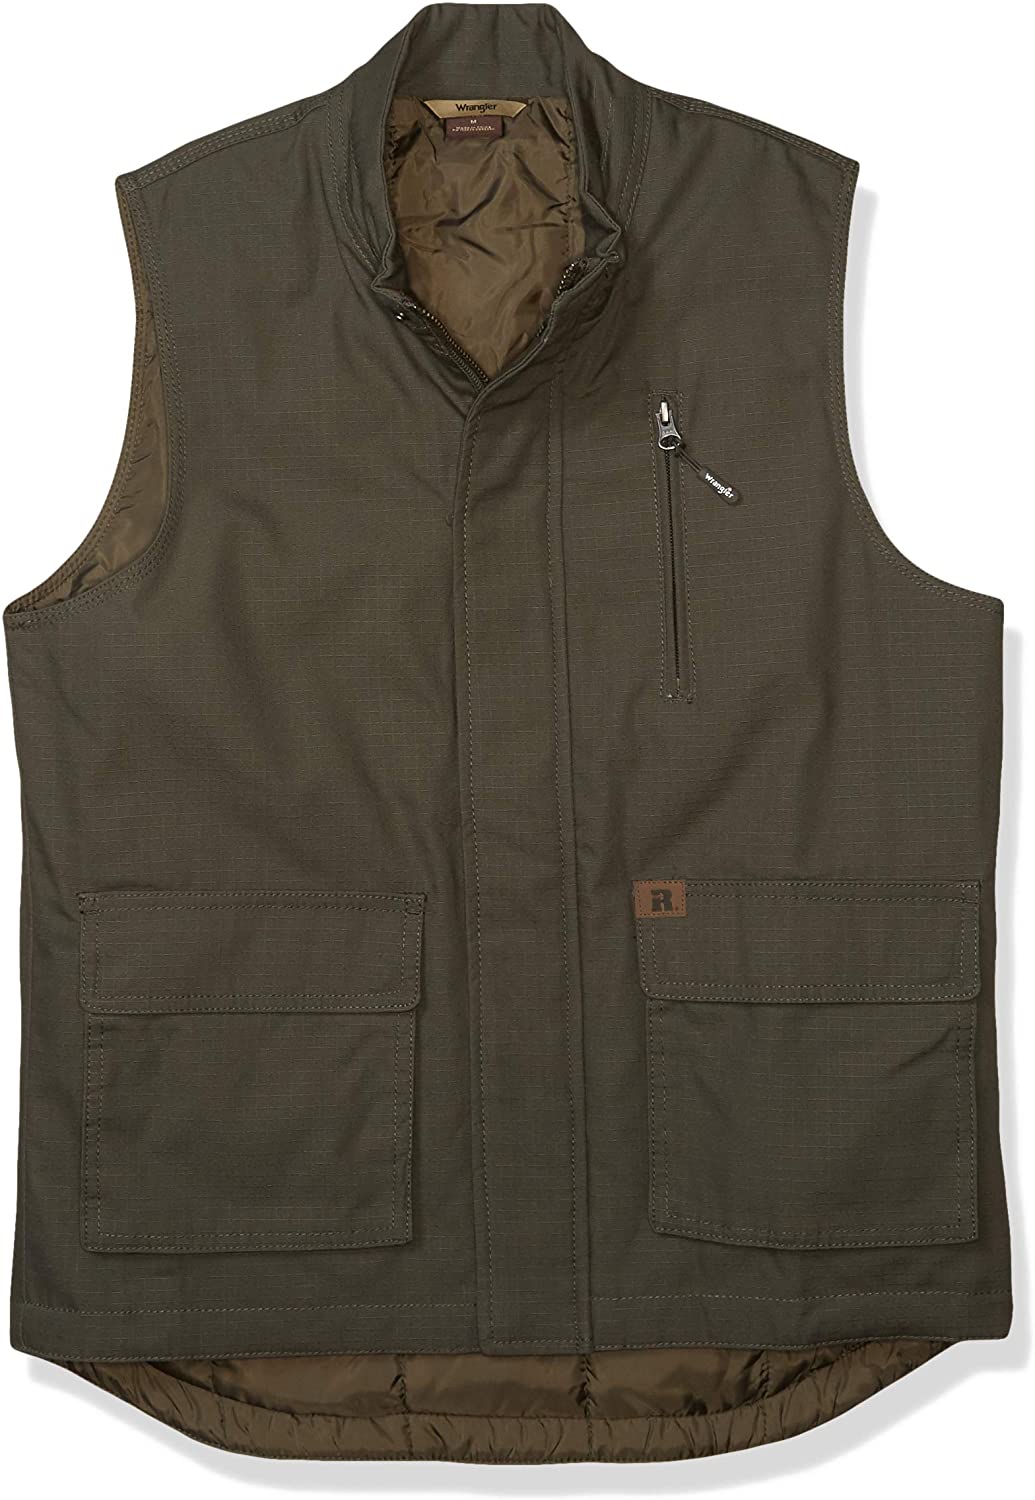 Wrangler Riggs Workwear Men's Foreman Vest | eBay